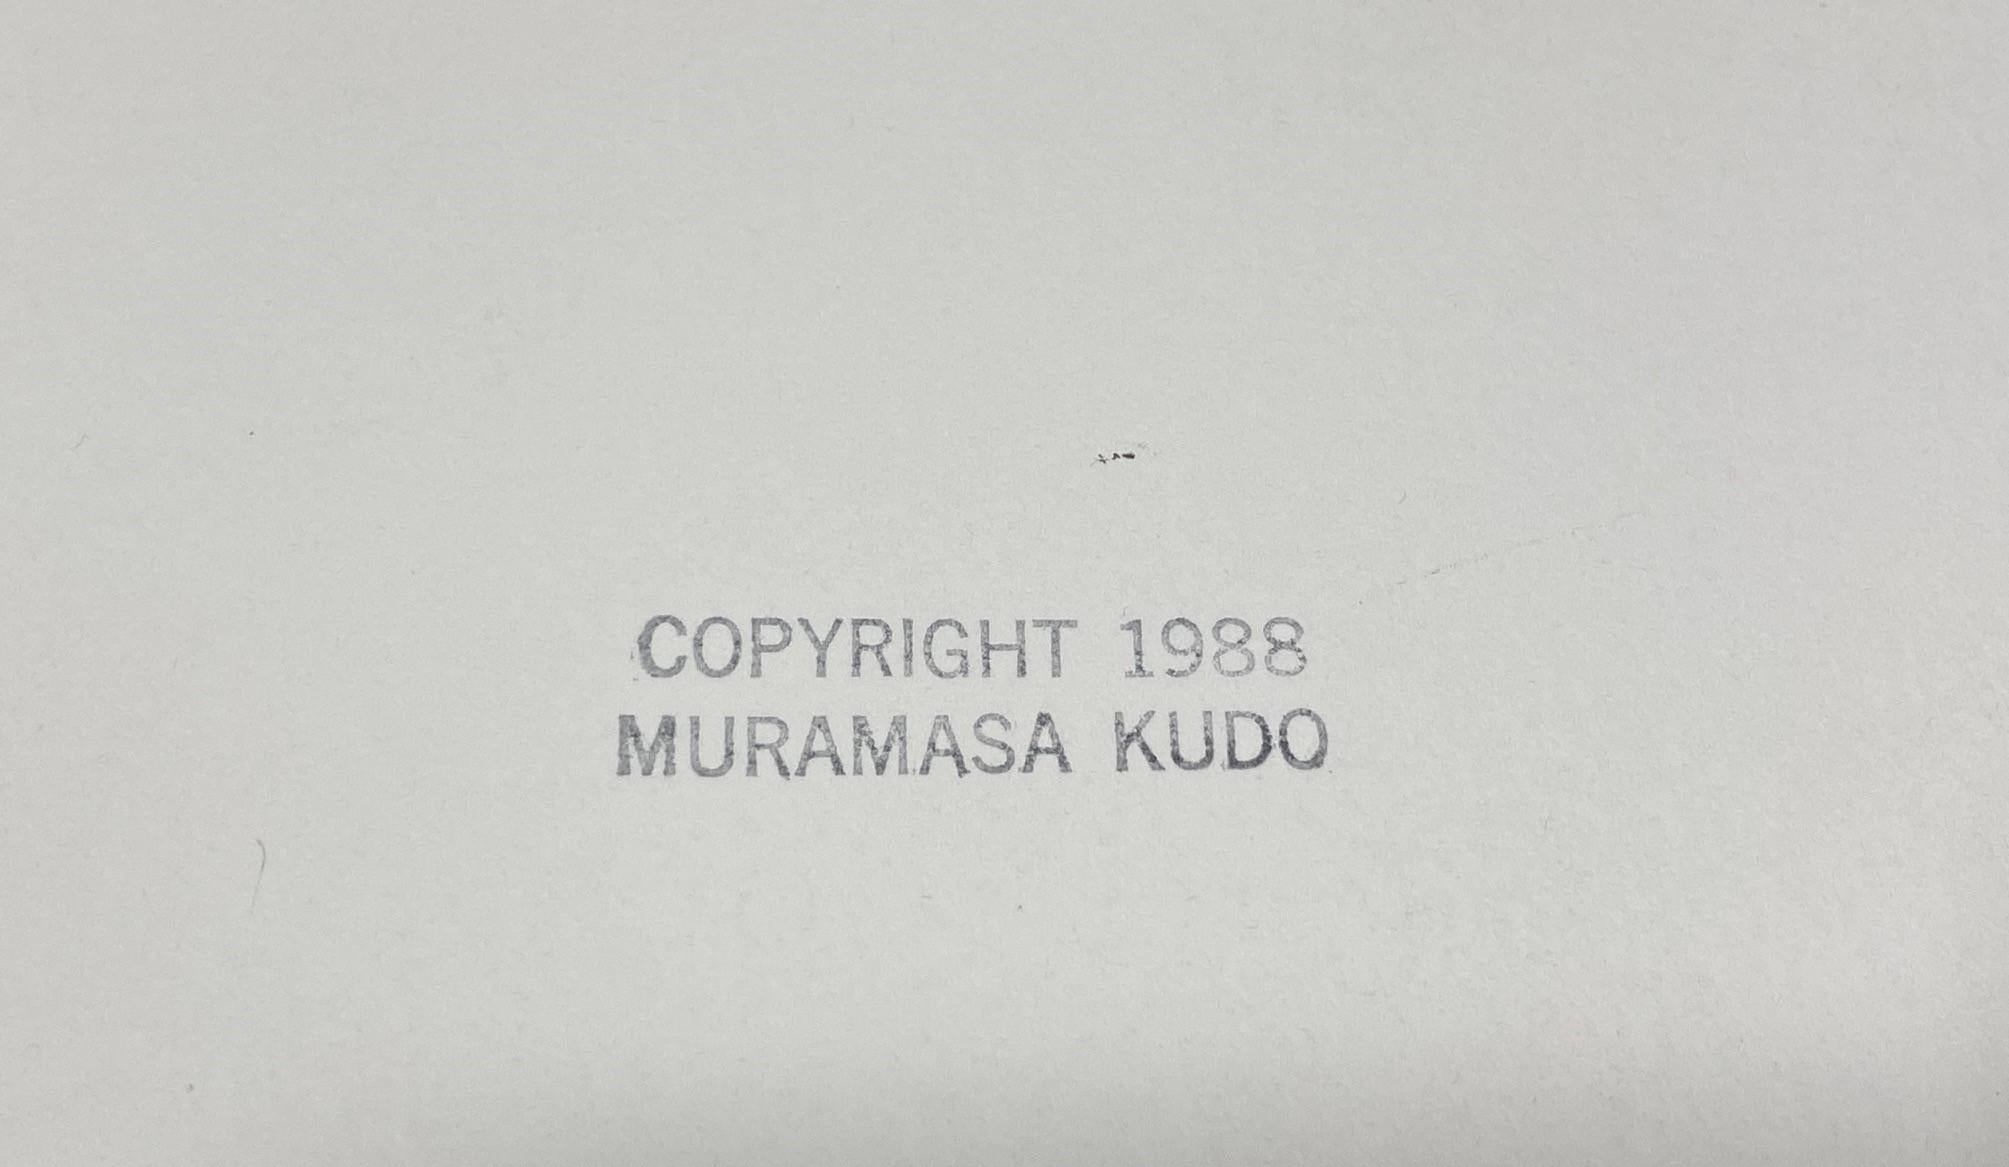 Muramasa Kudo Signed Limited Edition Japanese Serigraph Print Sunflowers For Sale 7